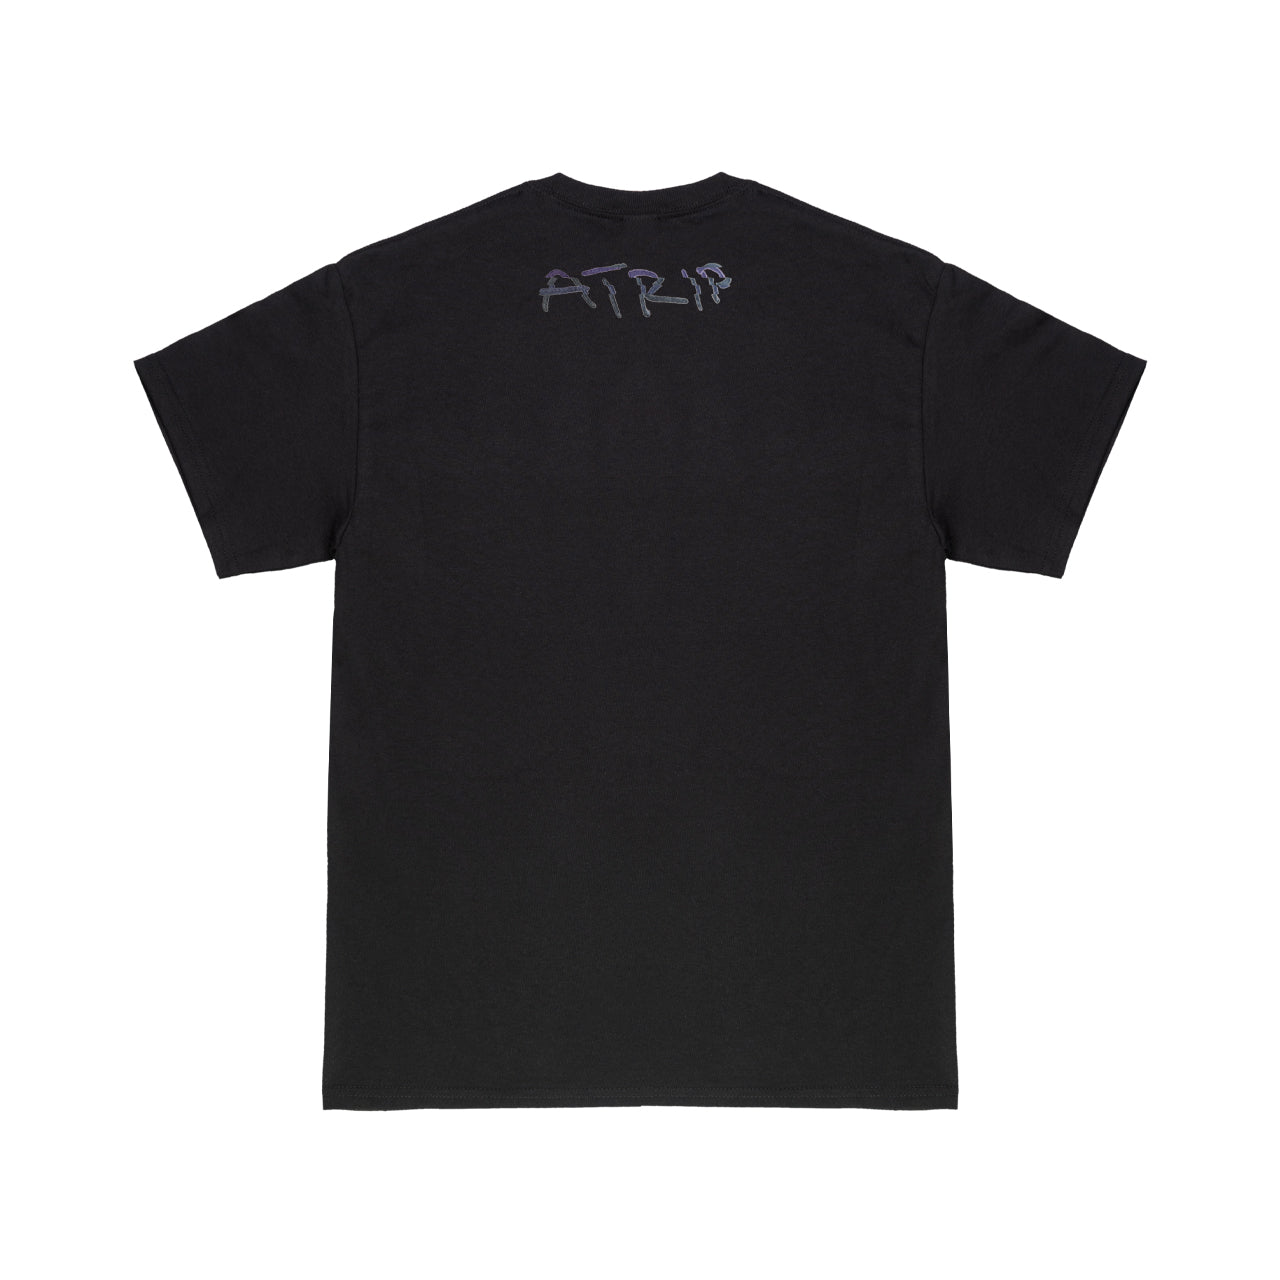 Atrip - Desire Black Shirt